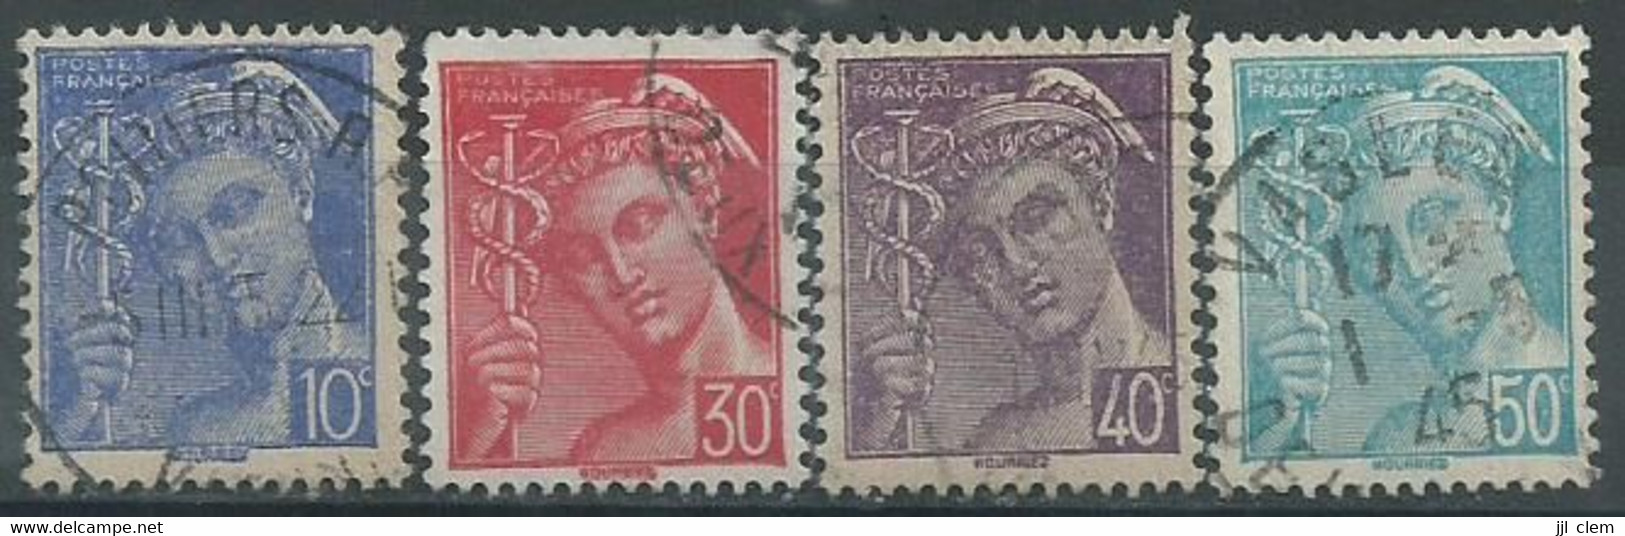 France  N° 546 à 549  Obl - 1938-42 Mercure